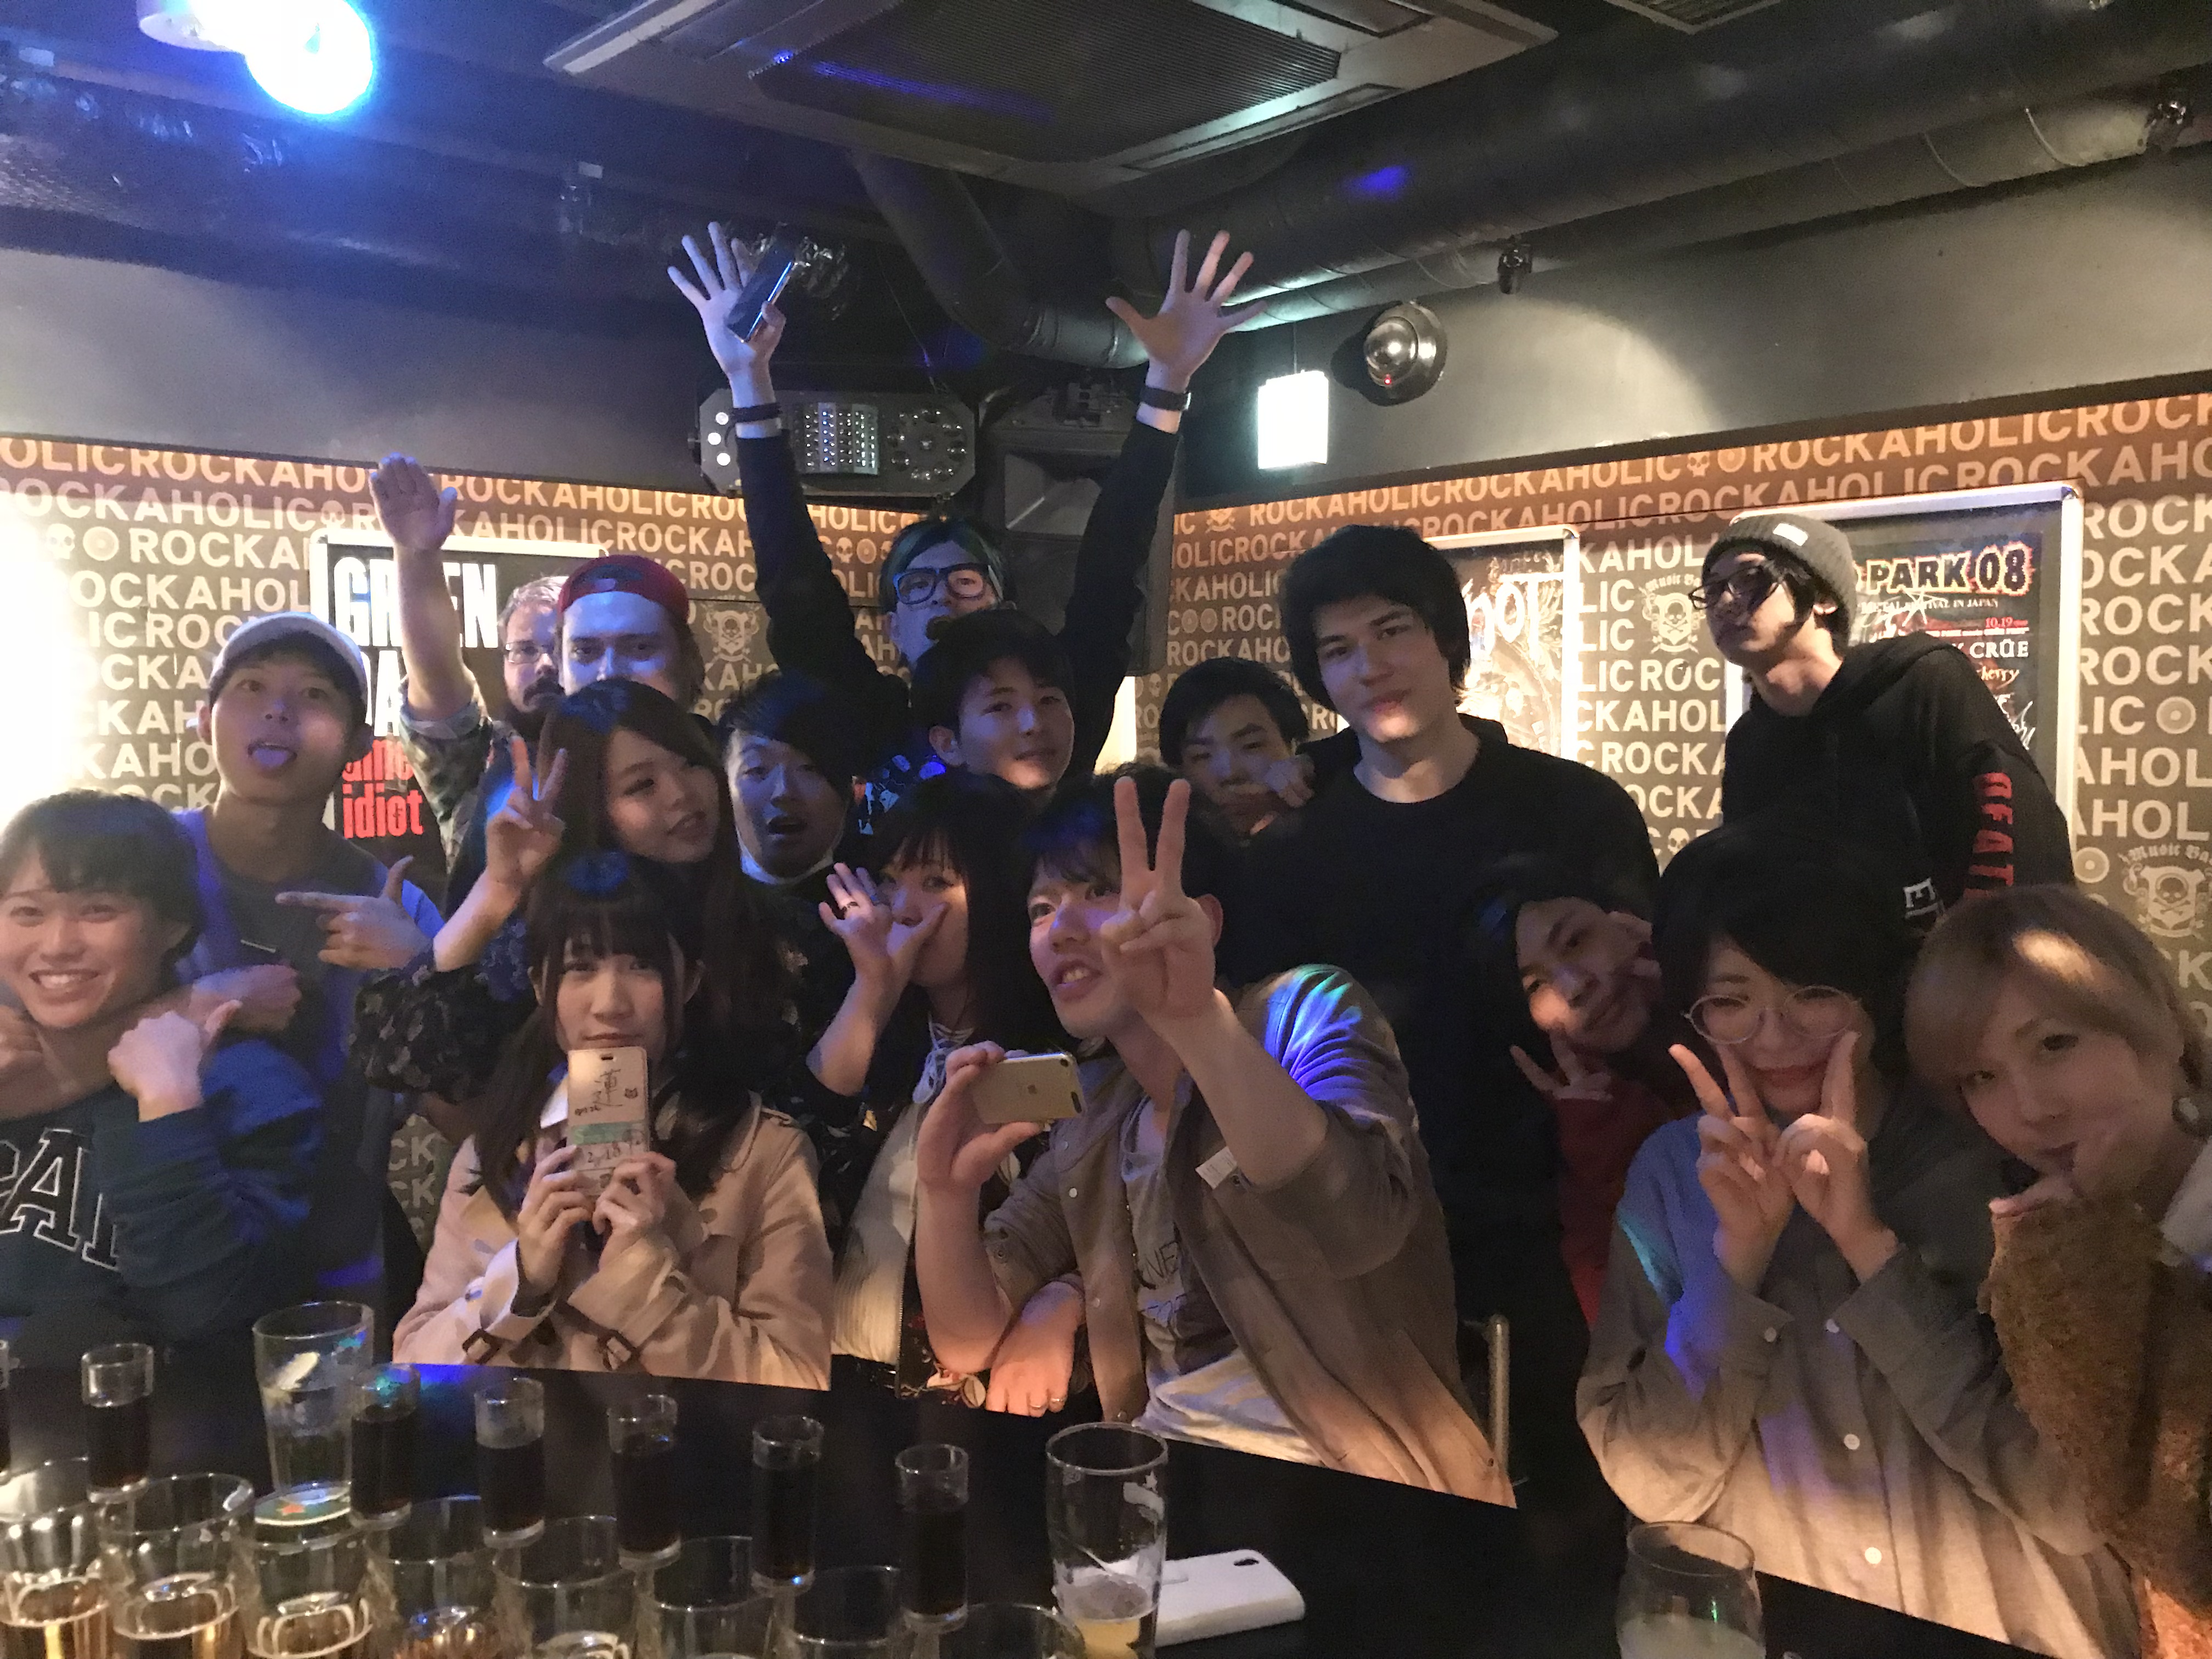 https://bar-rockaholic.jp/shibuya/blog/7CBC280E-E56B-4B80-8976-5AE34950EF42.jpeg